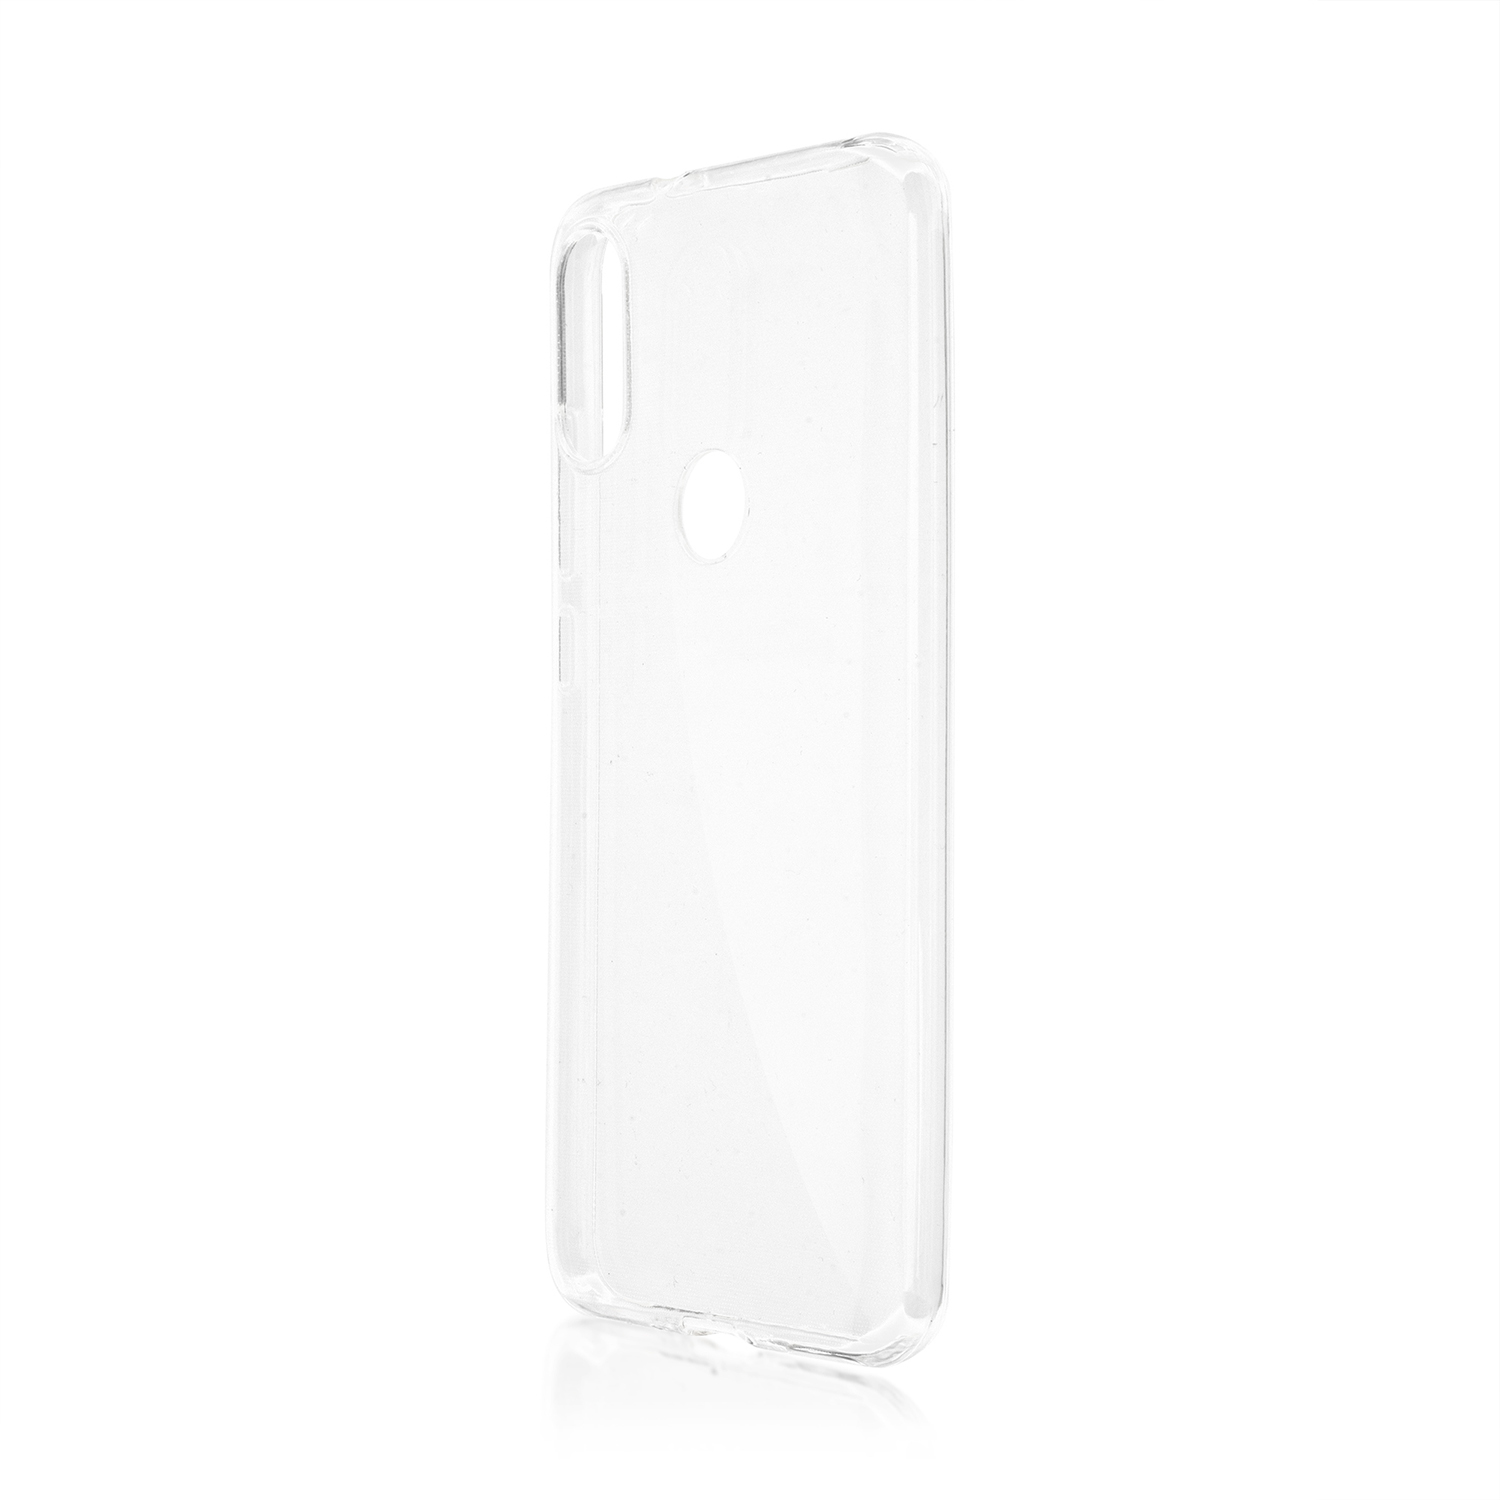 Силиконовый чехол BoraSCO для Xiaomi Mi Play прозрачный силиконовый чехол на xiaomi mi play красивые бигль для сяоми ми плей